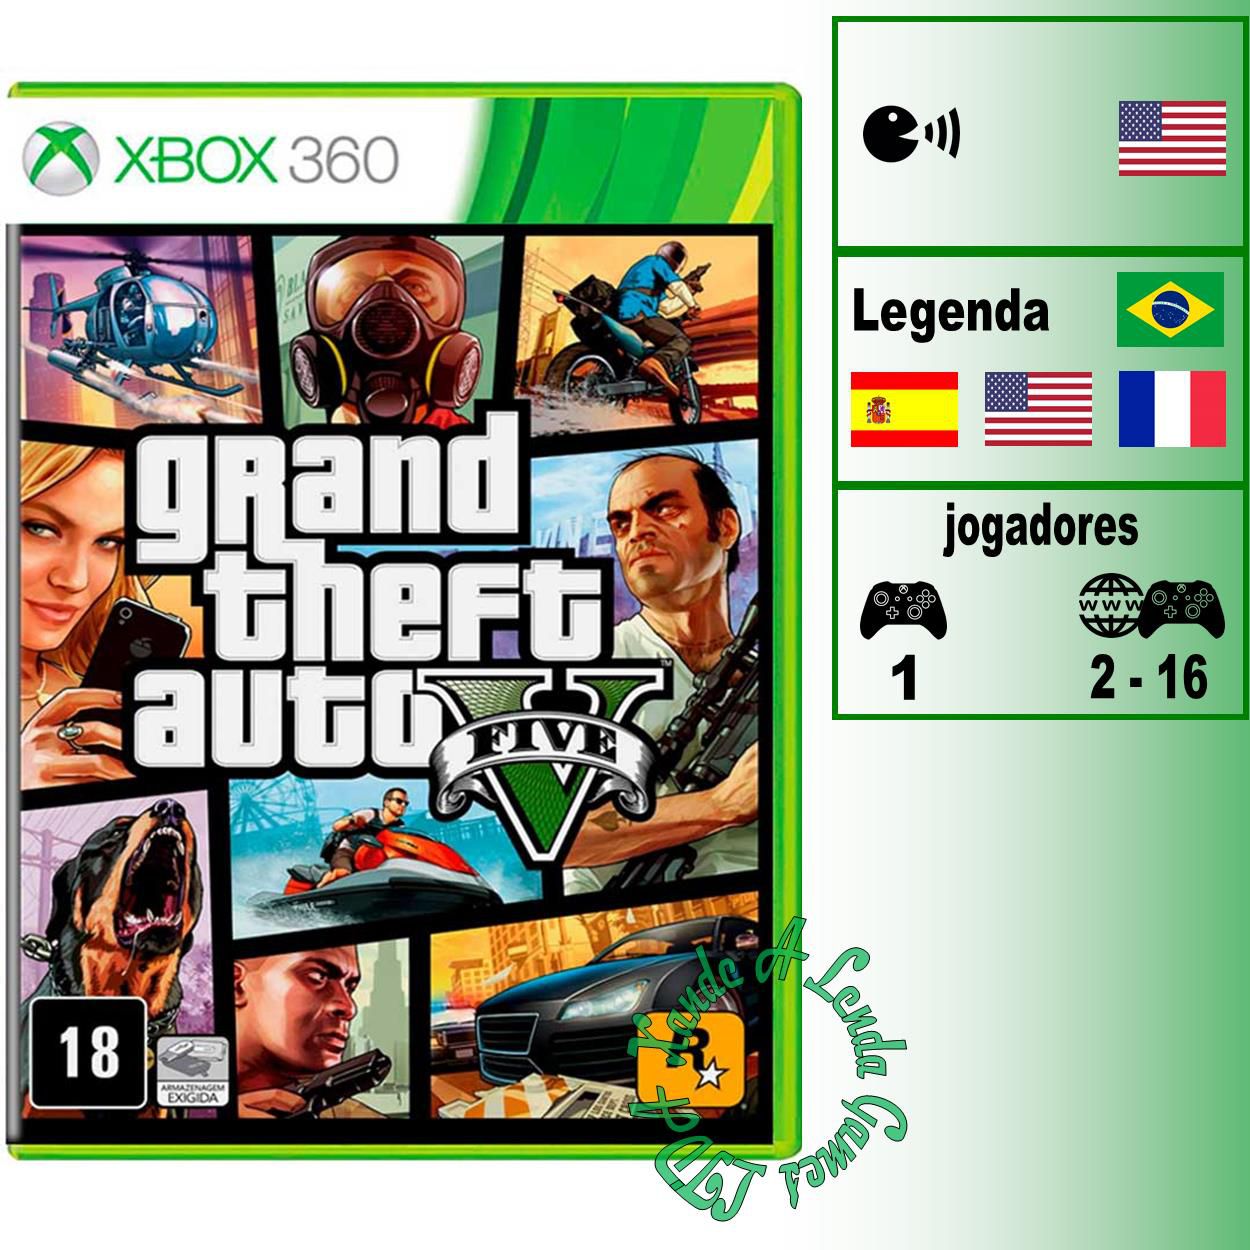 GTA V XBOX ONE, Jogos Xbox One Promoção